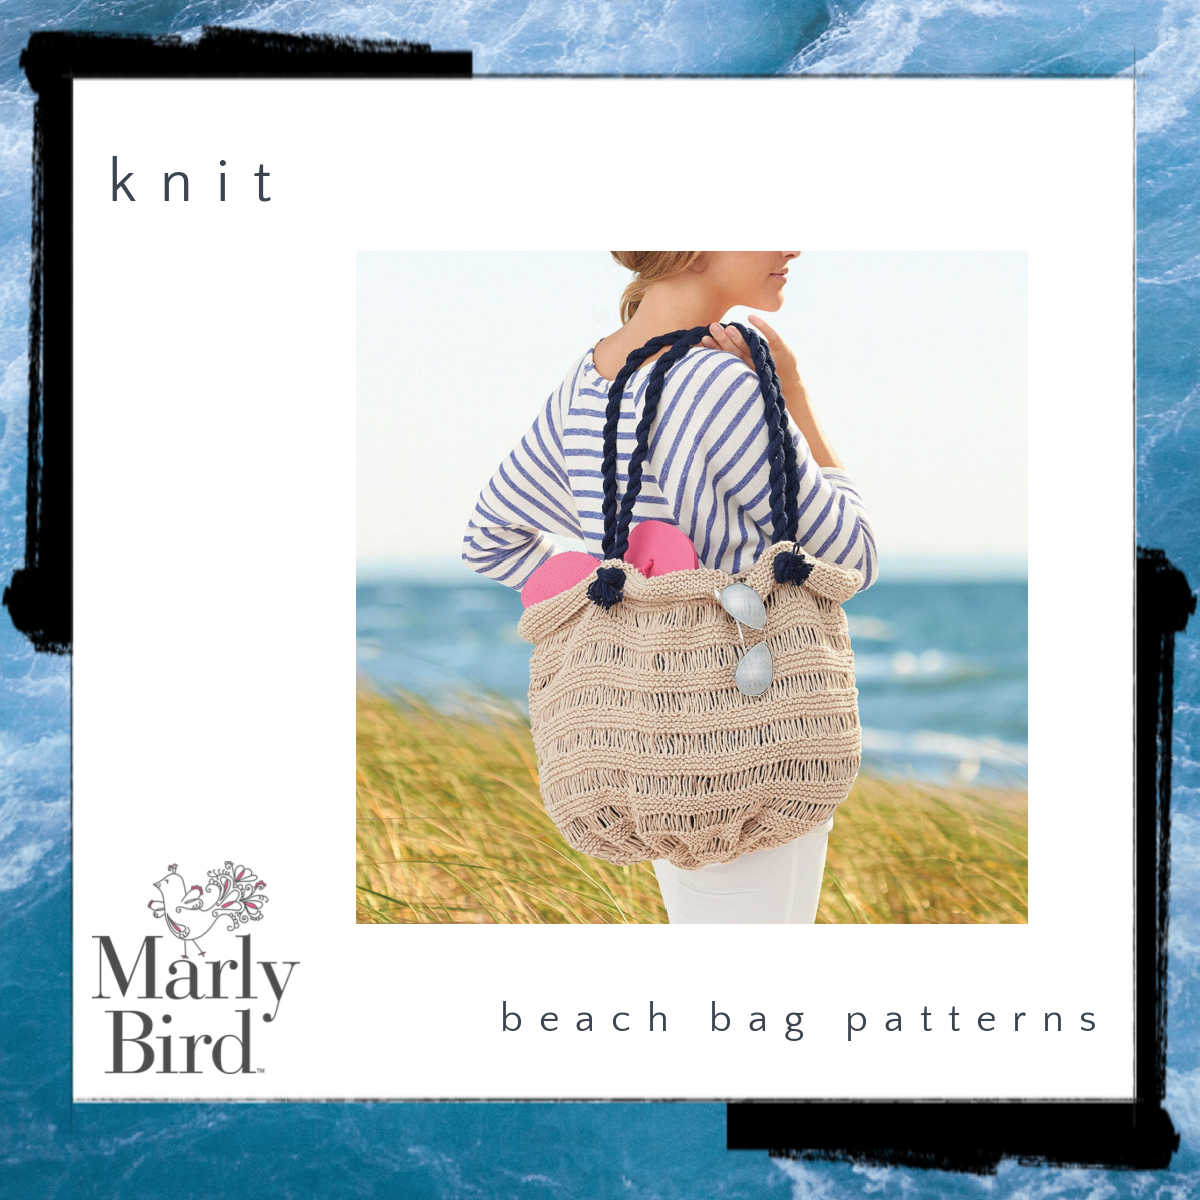 knit beach bag patterns - Marly Bird